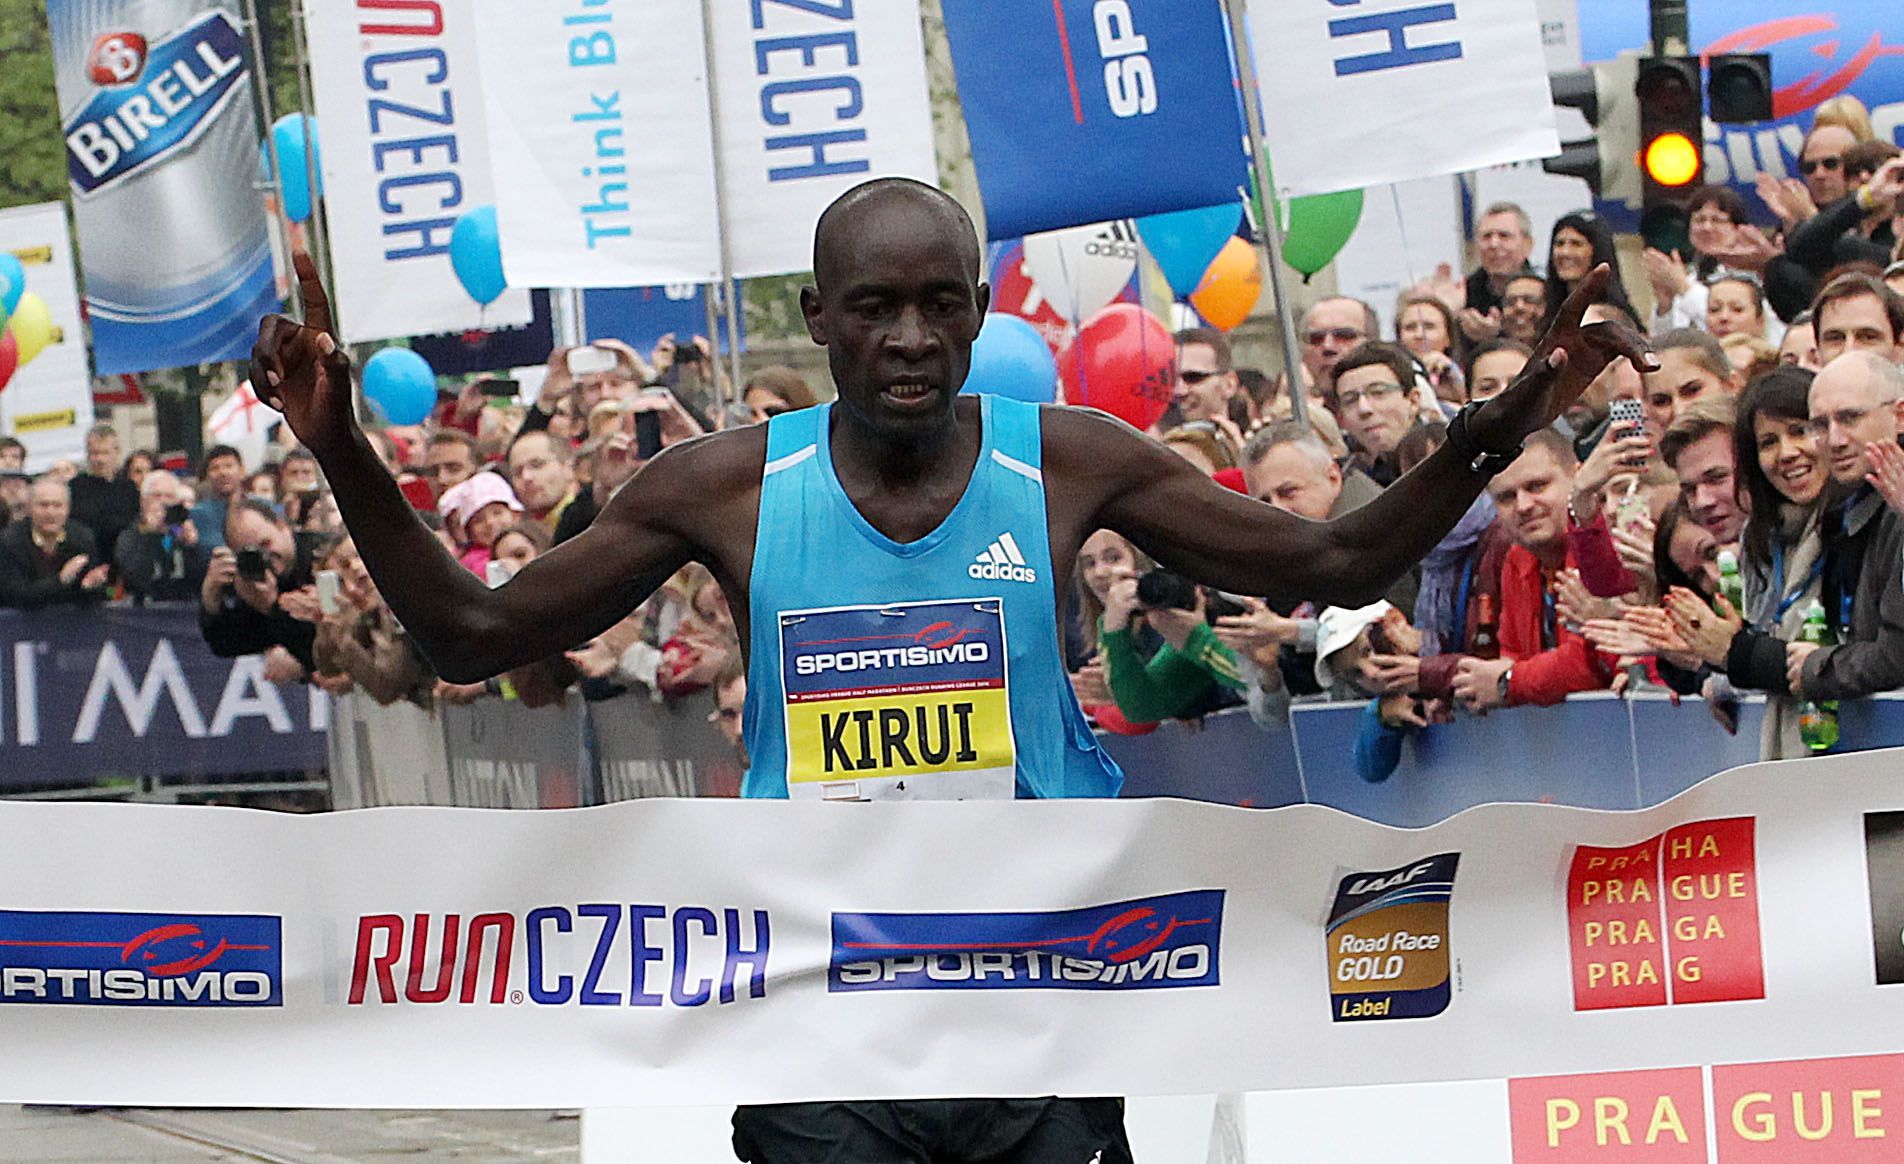 Pražský půlmaraton 2014 (Peter Kirui)